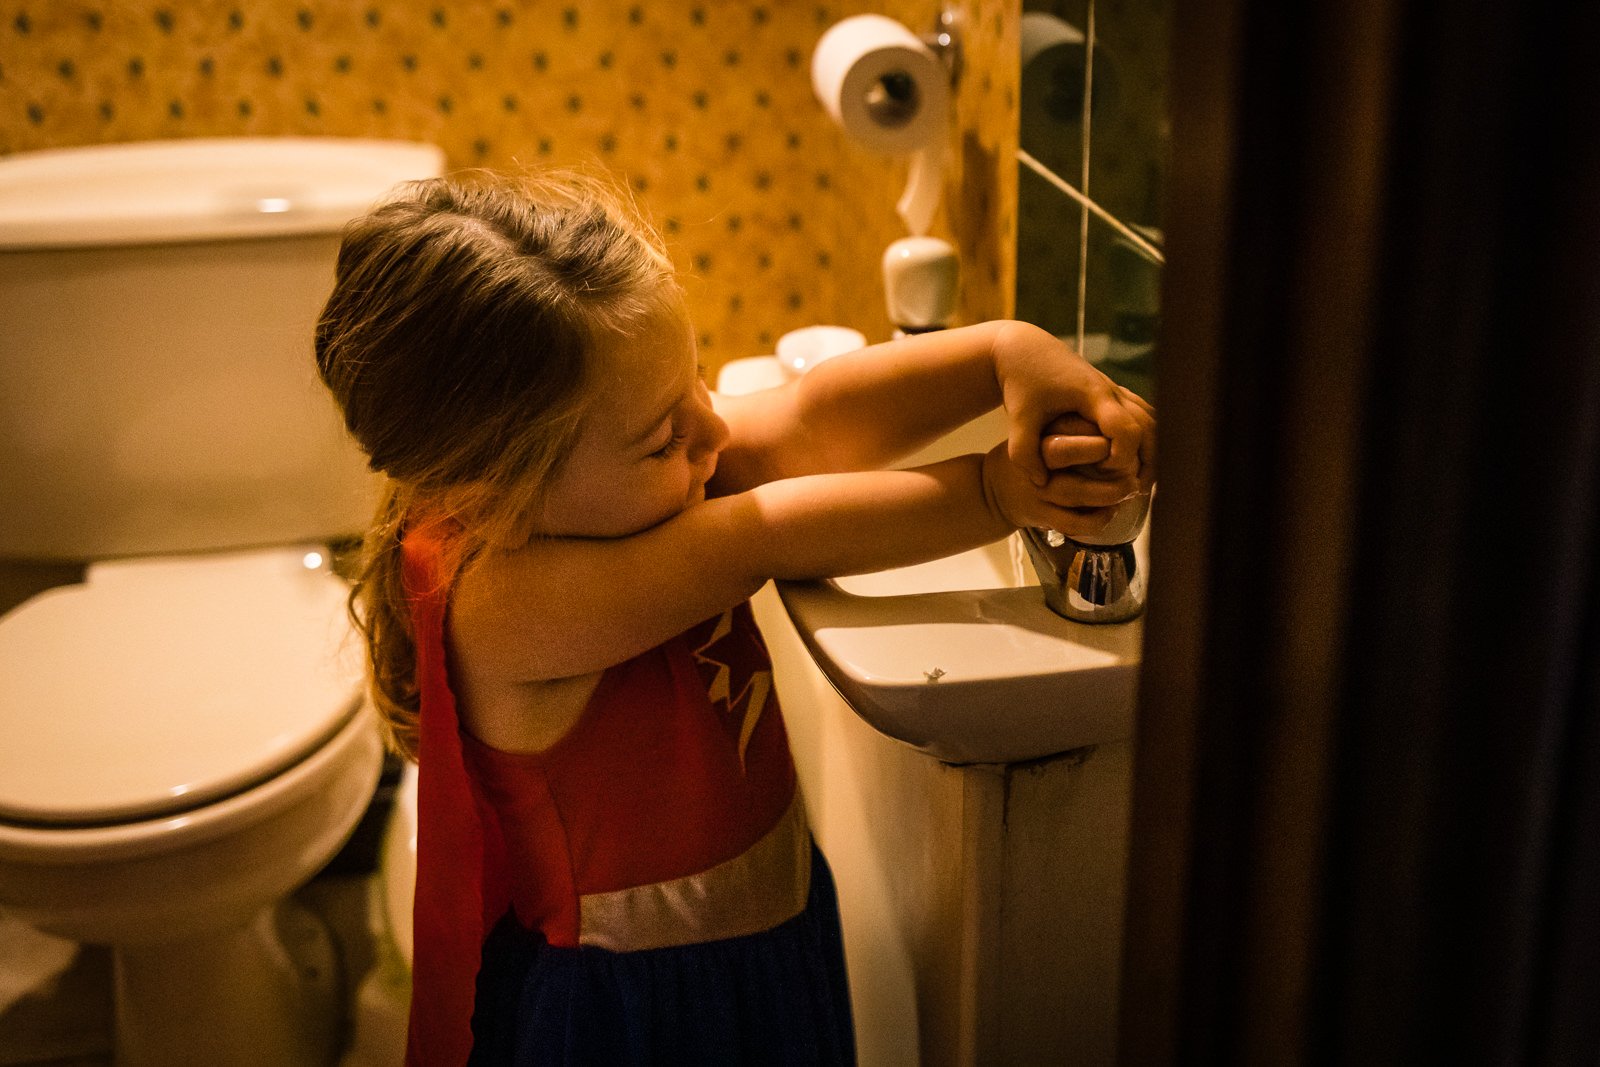 Supergirl washes her hands